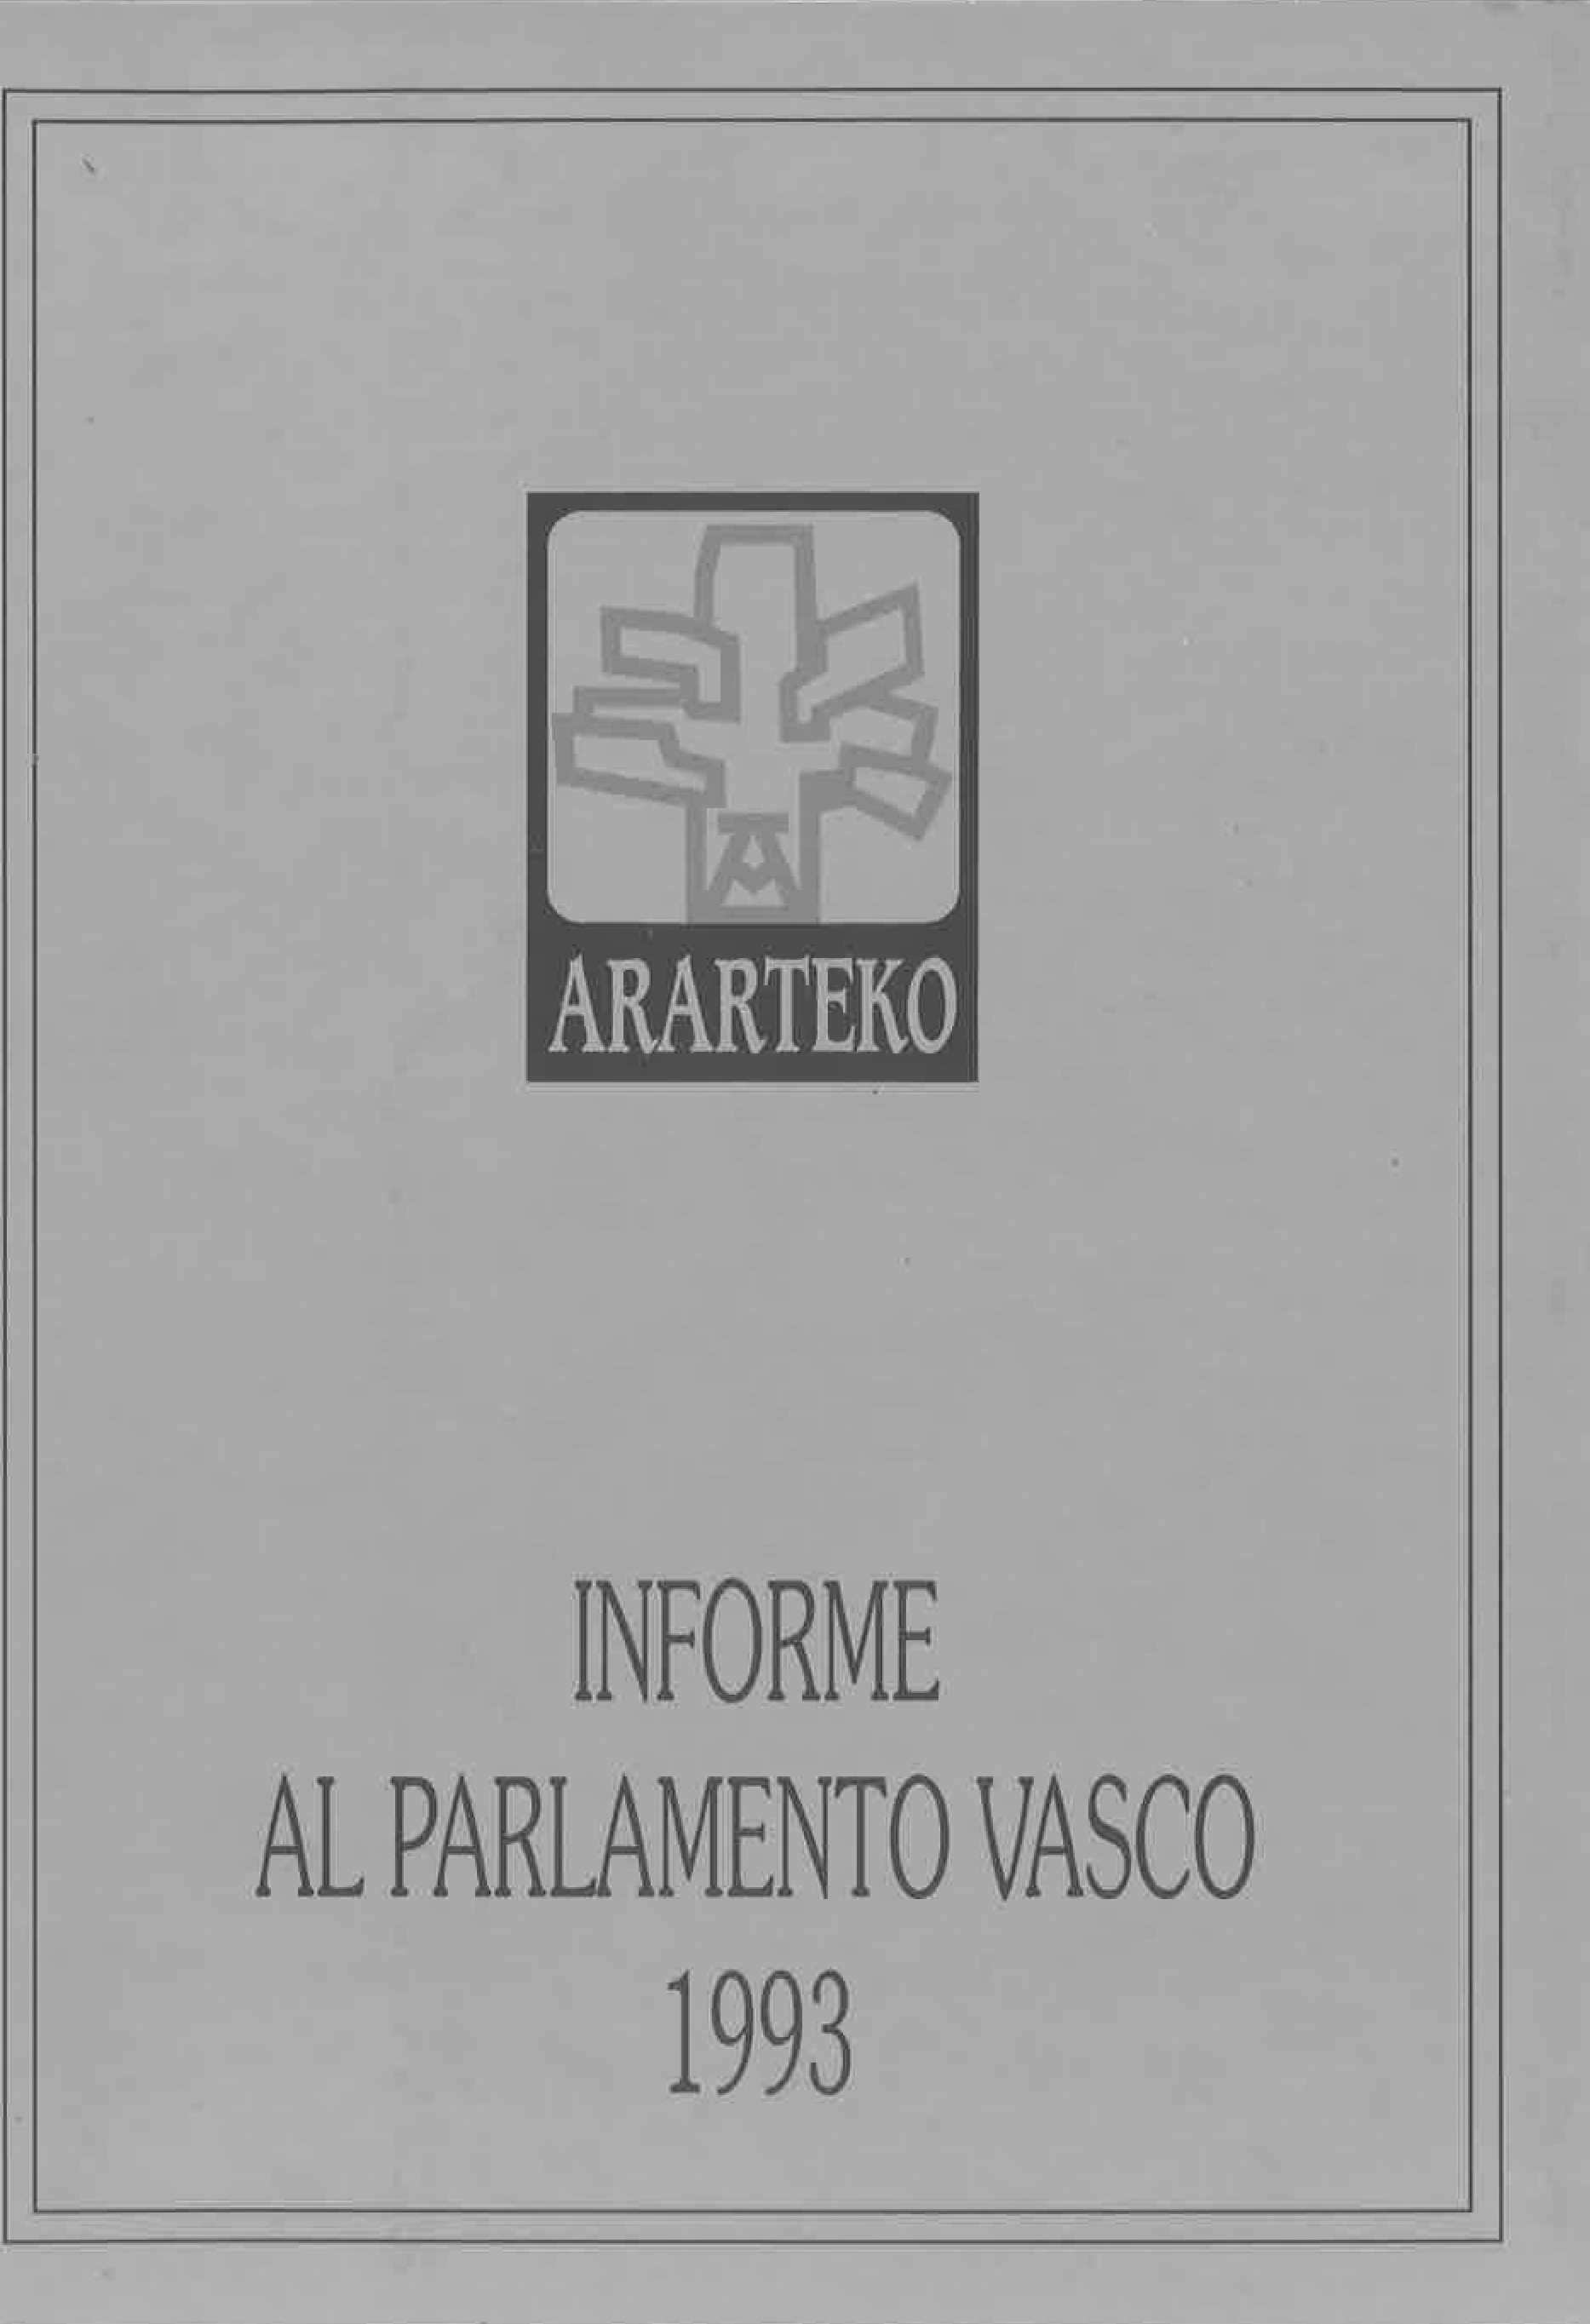 Informe del Ararteko al Parlamento Vasco año 1993